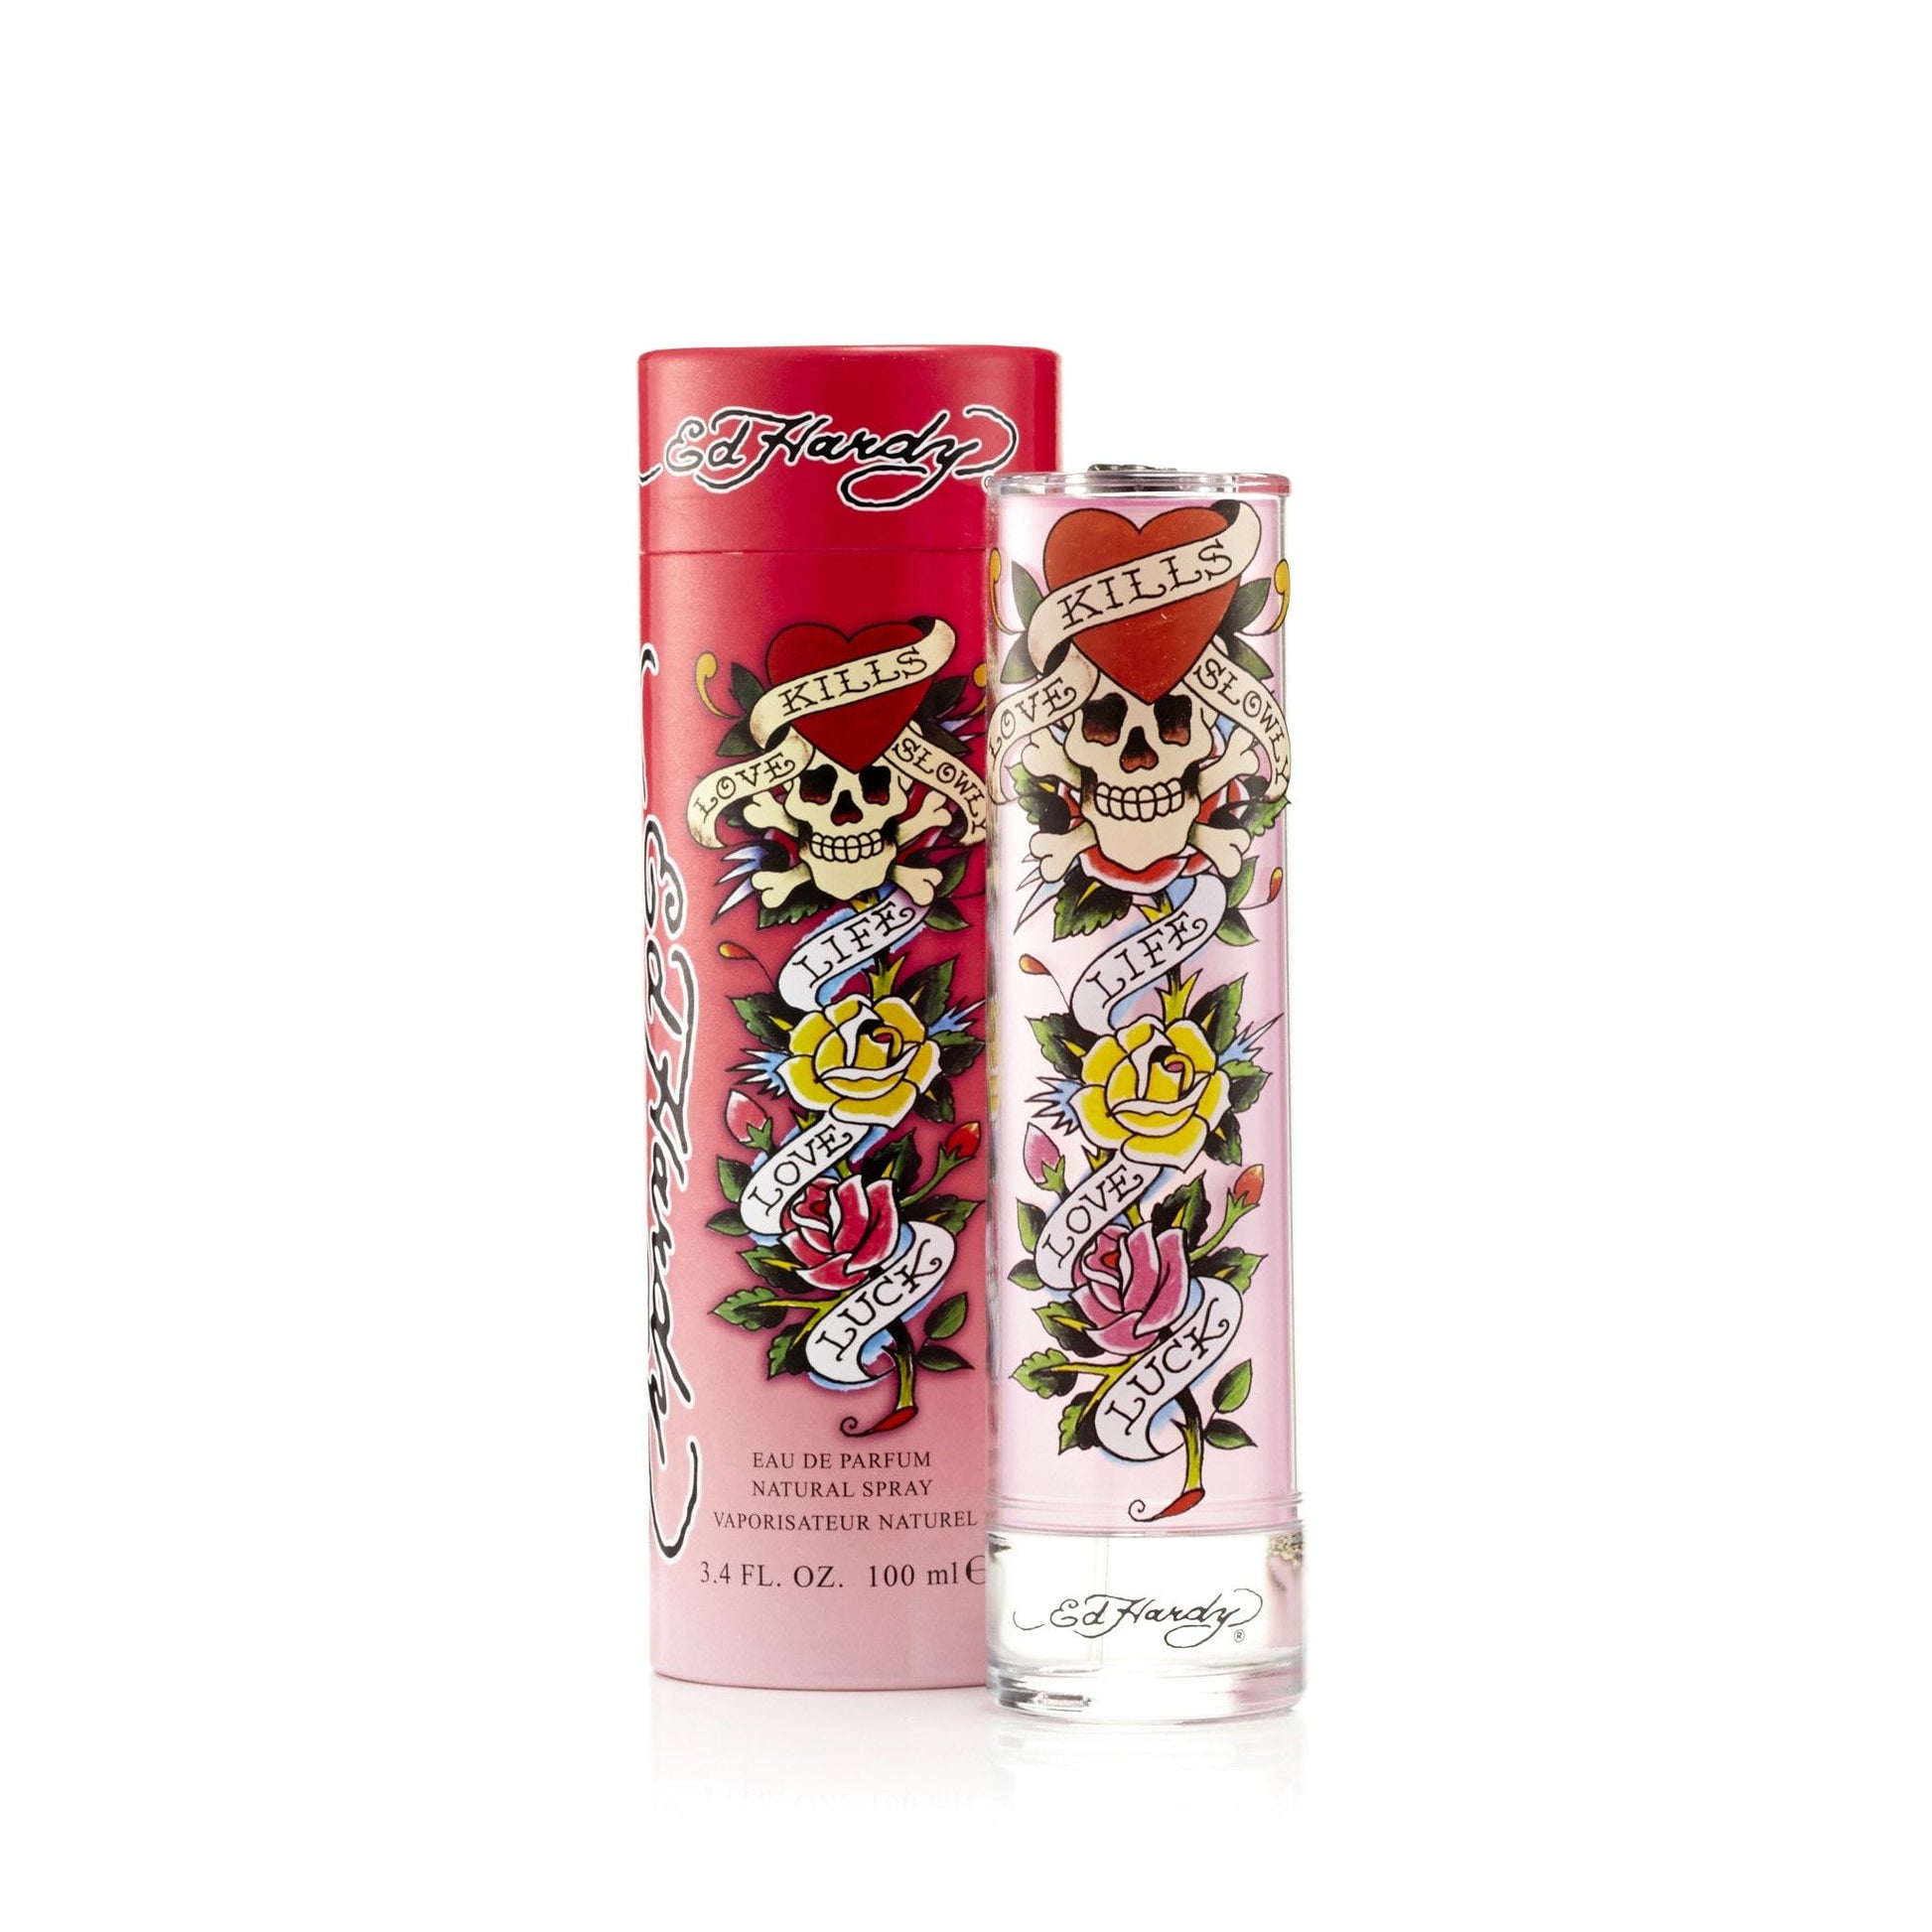 Ed Hardy Eau de Parfum Spray for Women by Christian Audigier, Product image 1